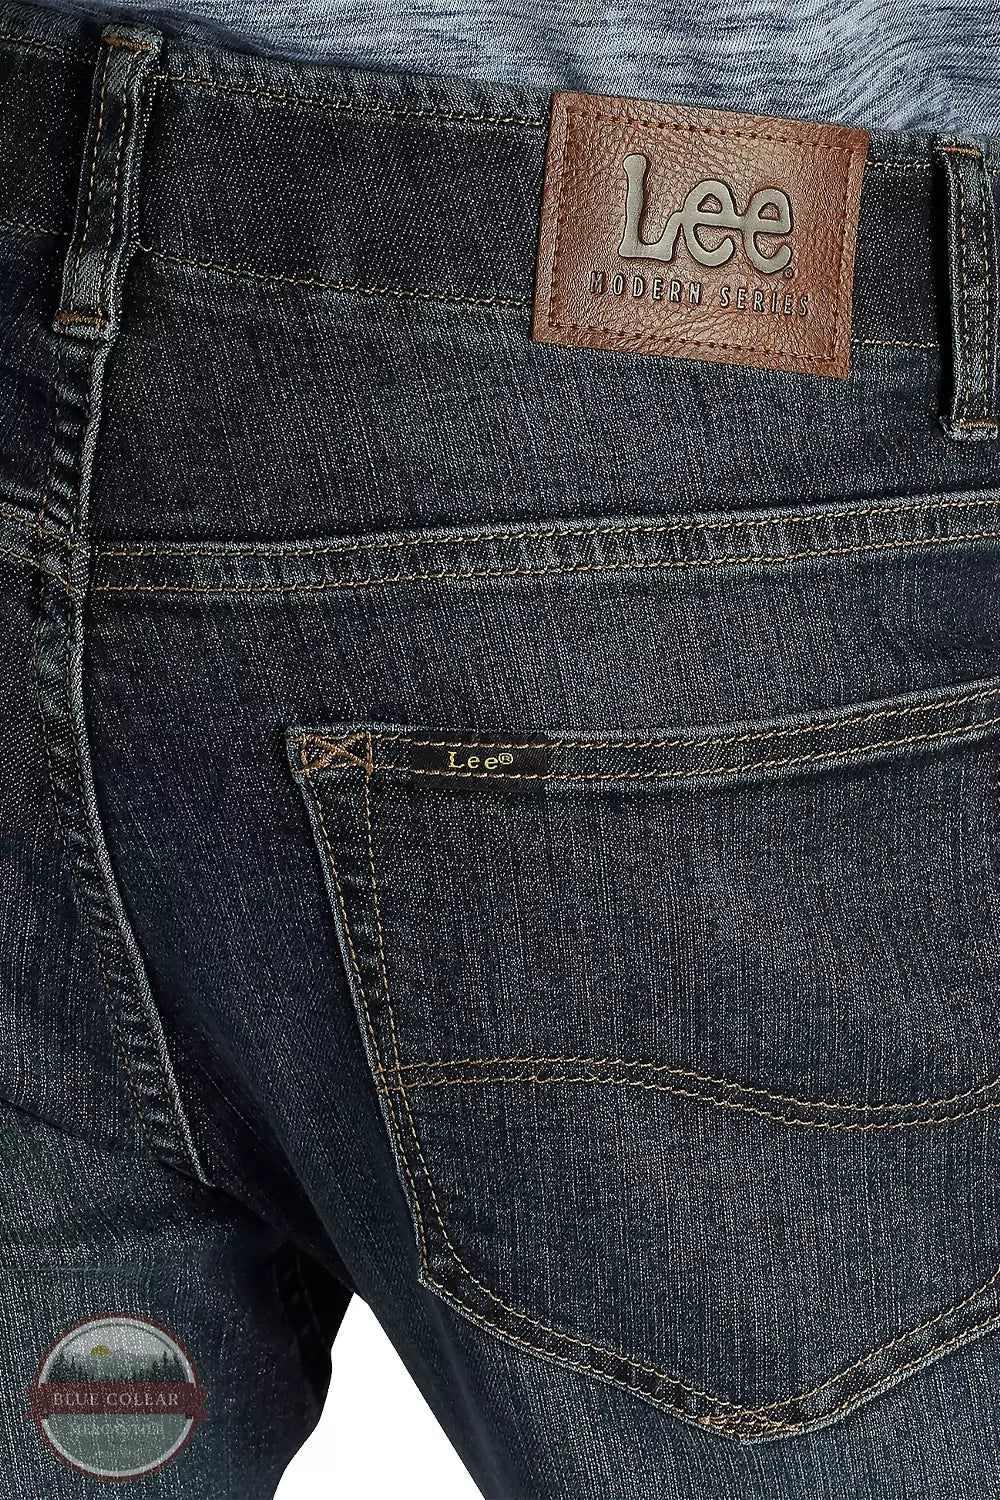 Lee 2015437 Extreme Motion Slim Straight Leg Jeans in Maverick Back Detail View